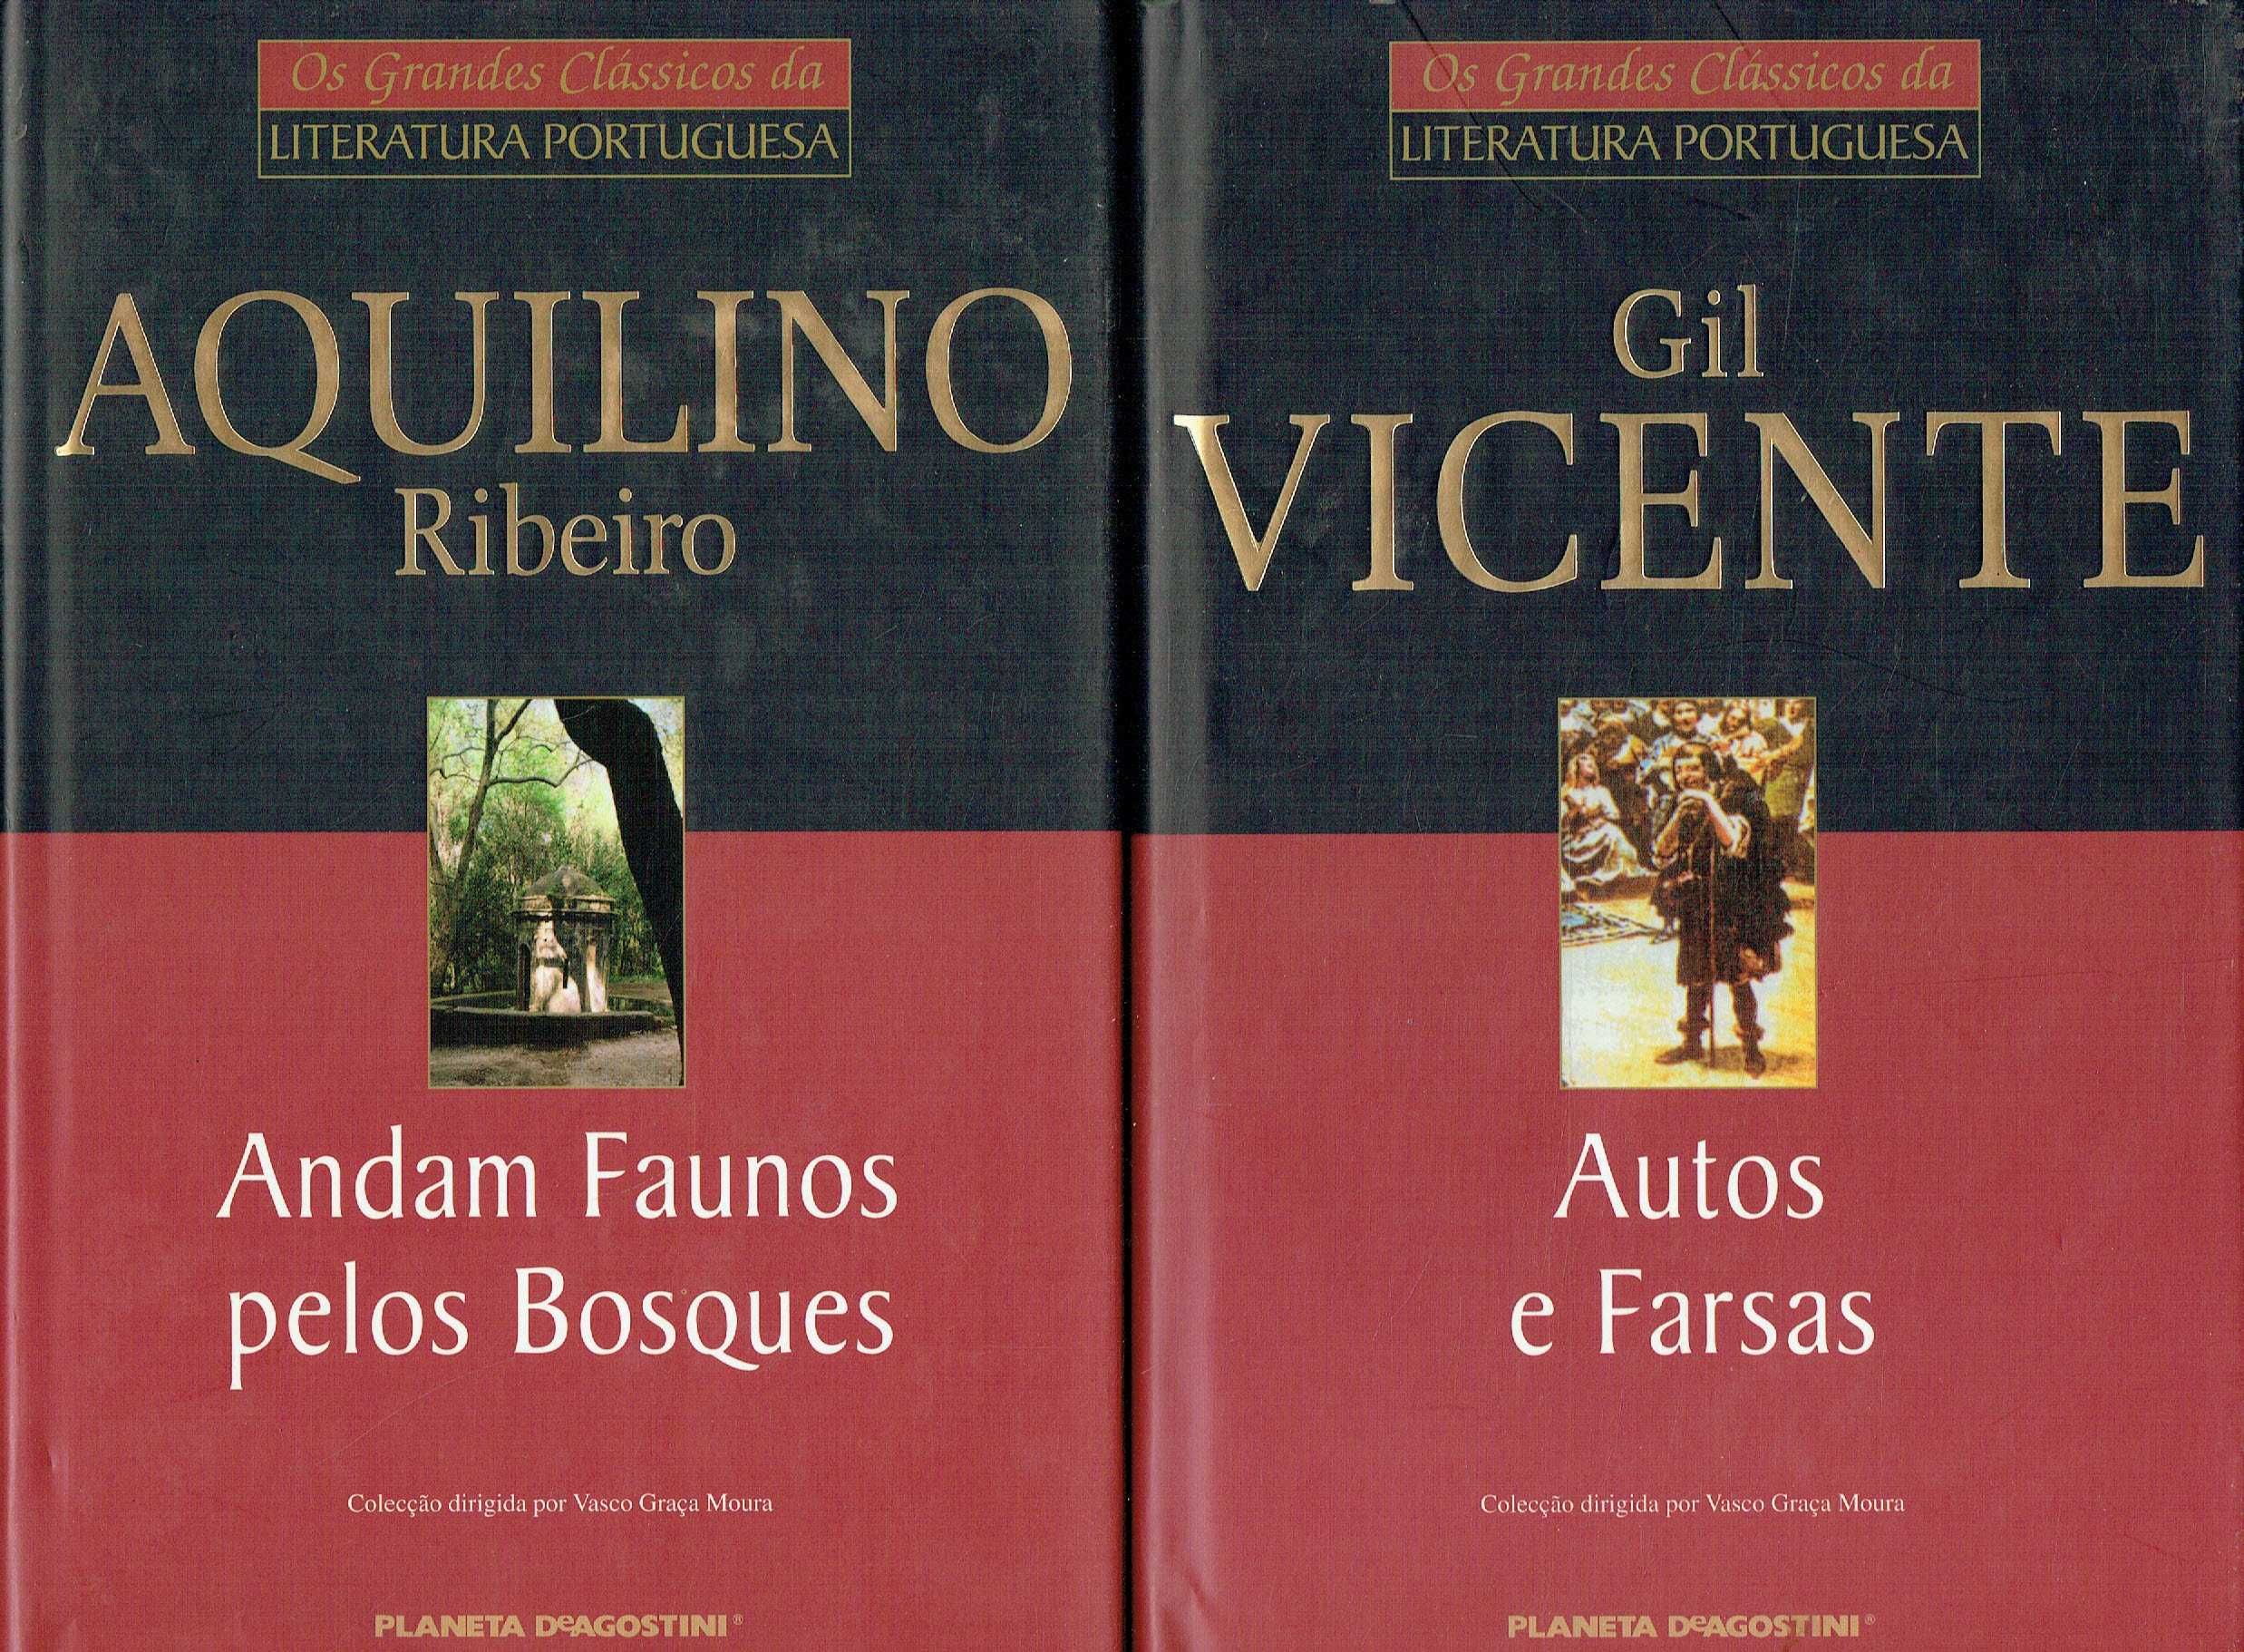 15238

Os Grandes Clássicos da Literatura Portuguesa

Planeta Agostini